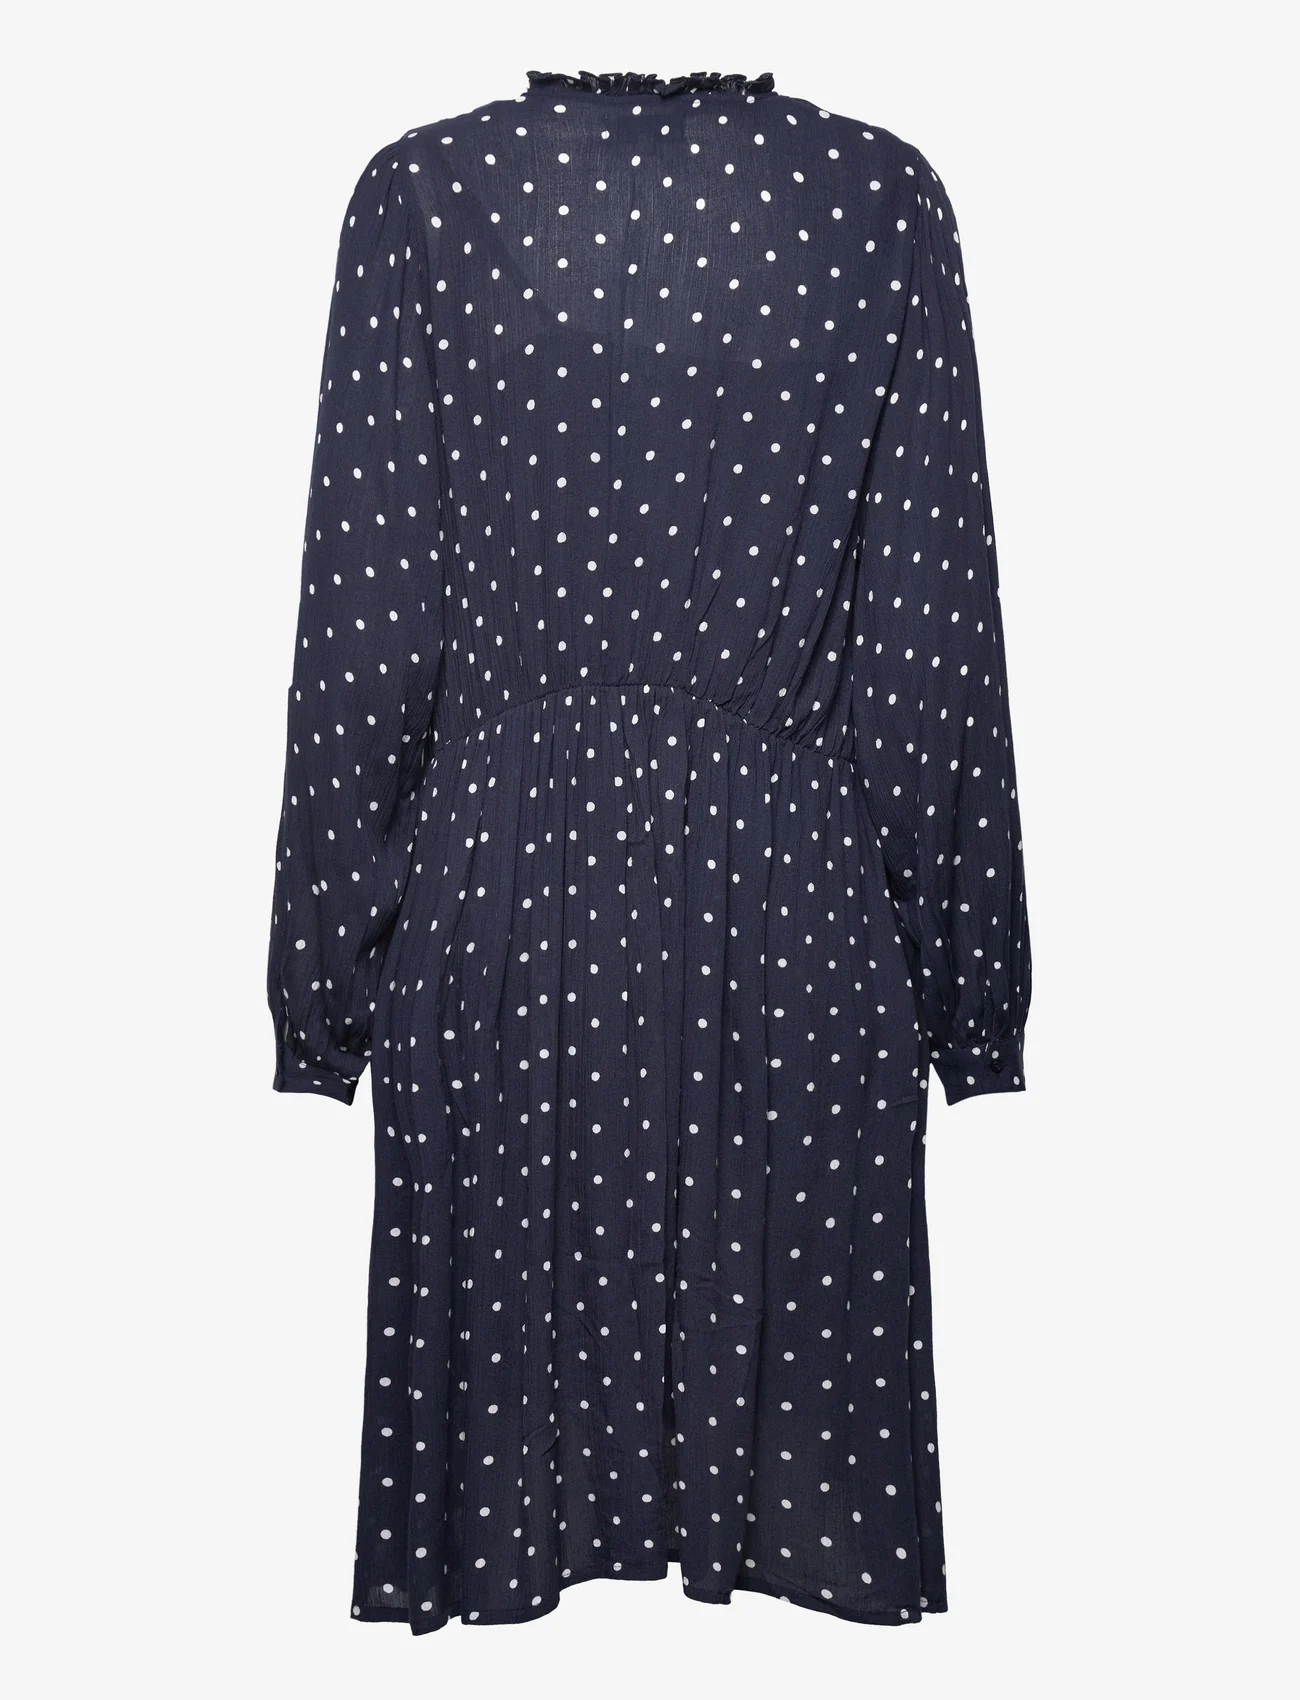 Lollys Laundry - Finnley Dress - midi dresses - 76 dot print - 1